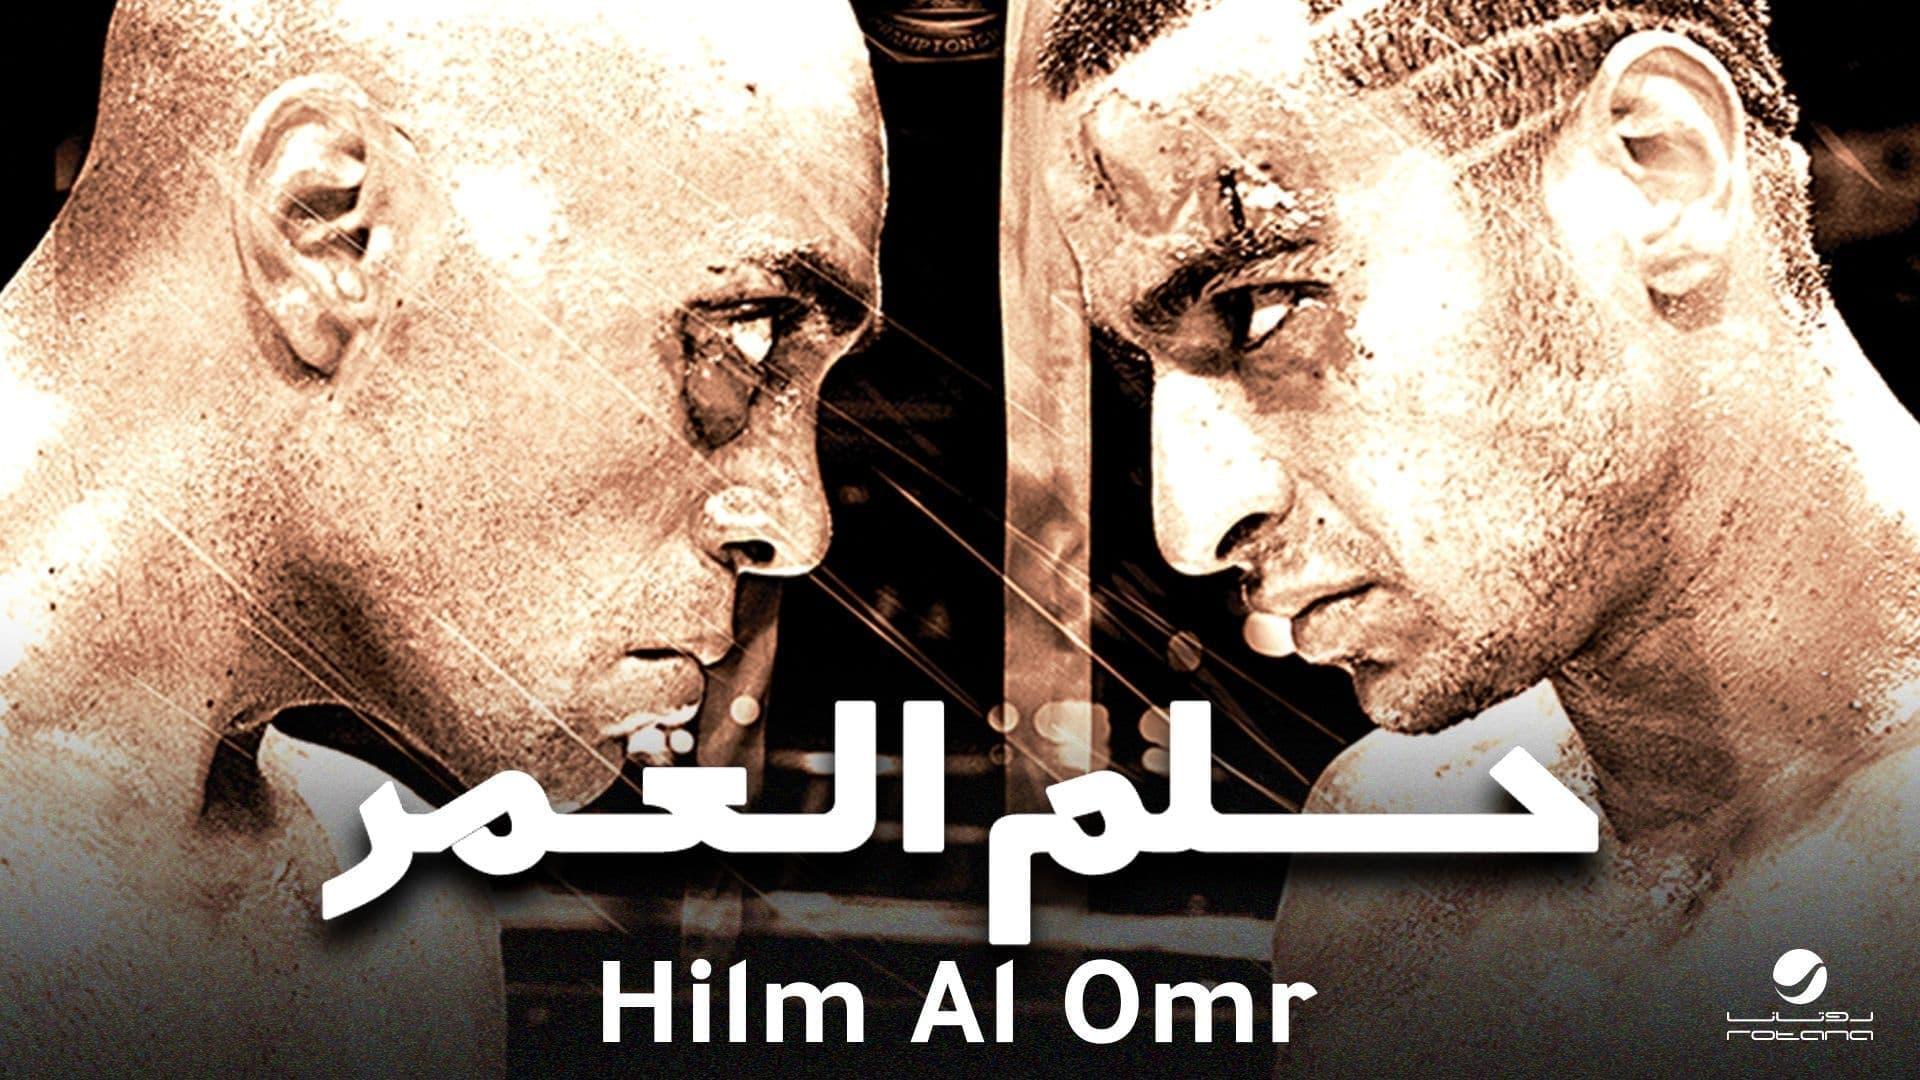 Helm Al Omr backdrop